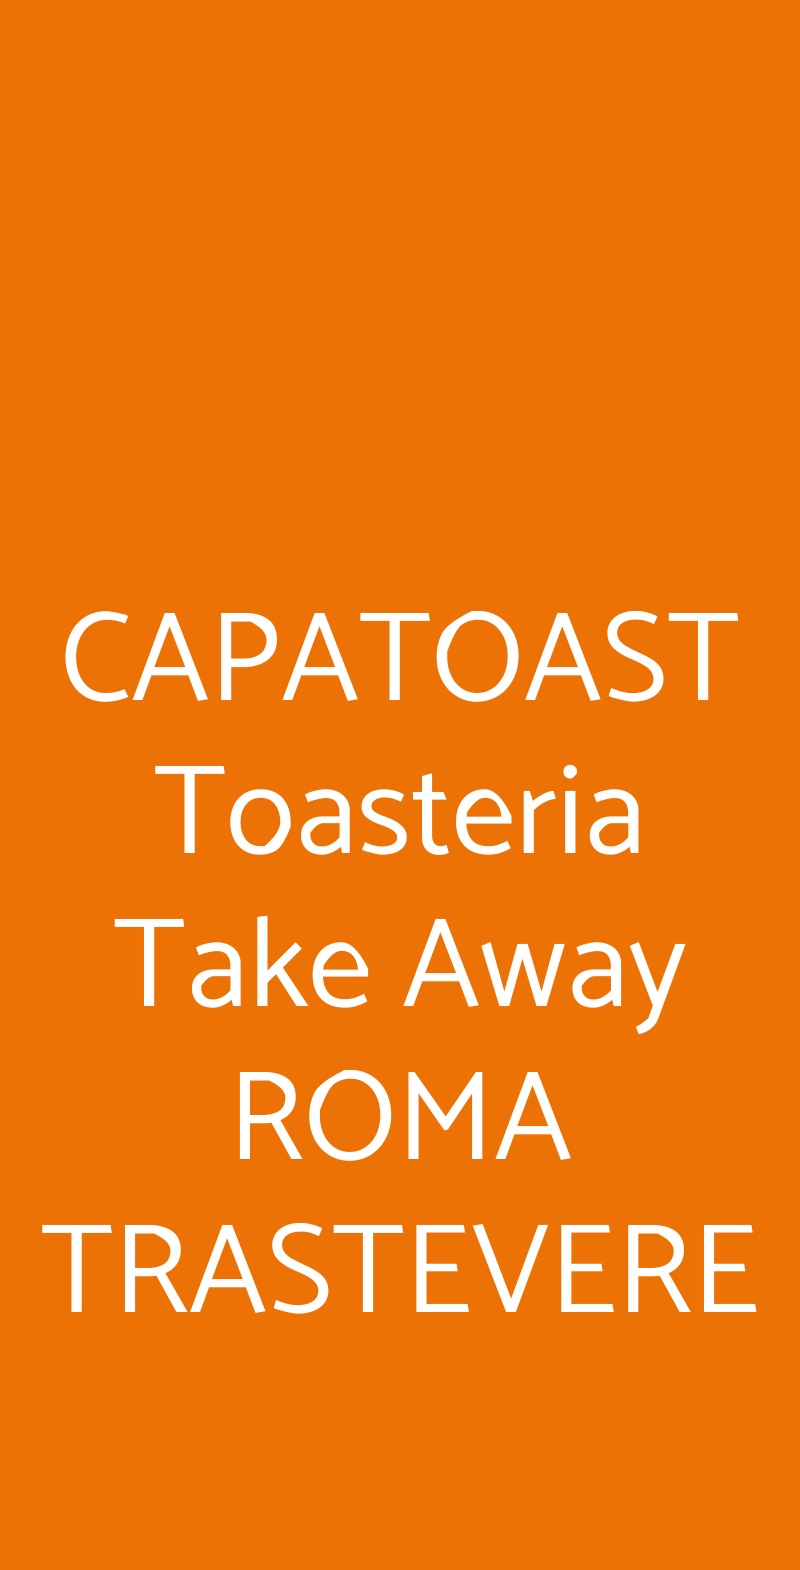 CAPATOAST Toasteria Take Away ROMA TRASTEVERE Roma menù 1 pagina